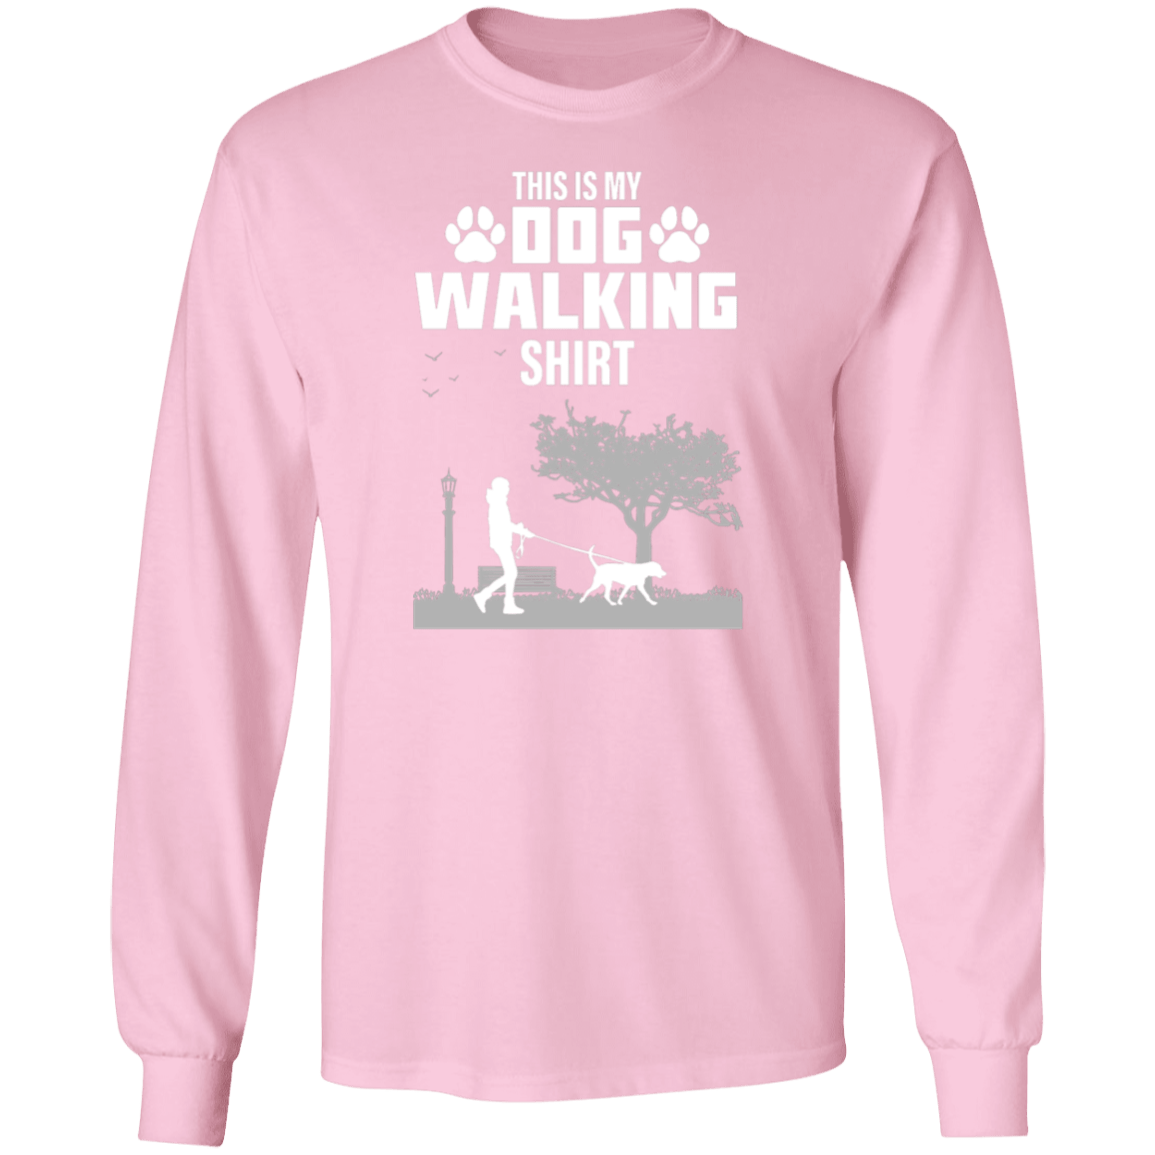 Dog Walking Shirt - Long Sleeve T Shirt.